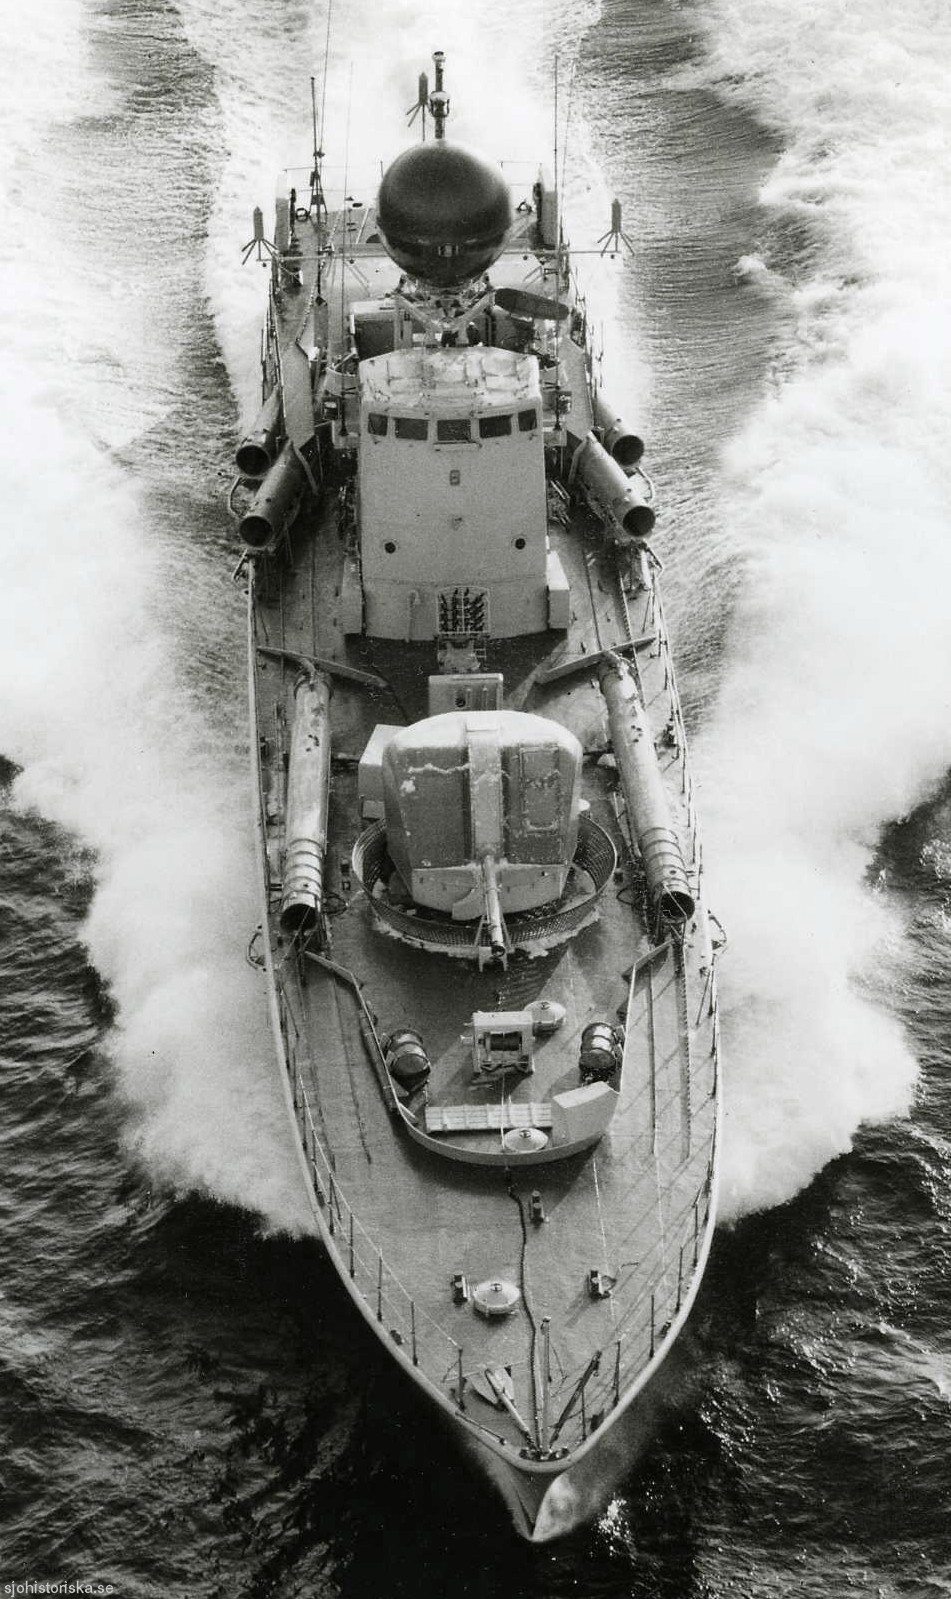 t122 sirius hswms hms spica class fast attack craft torpedo boat vessel swedish navy svenska marinen 03